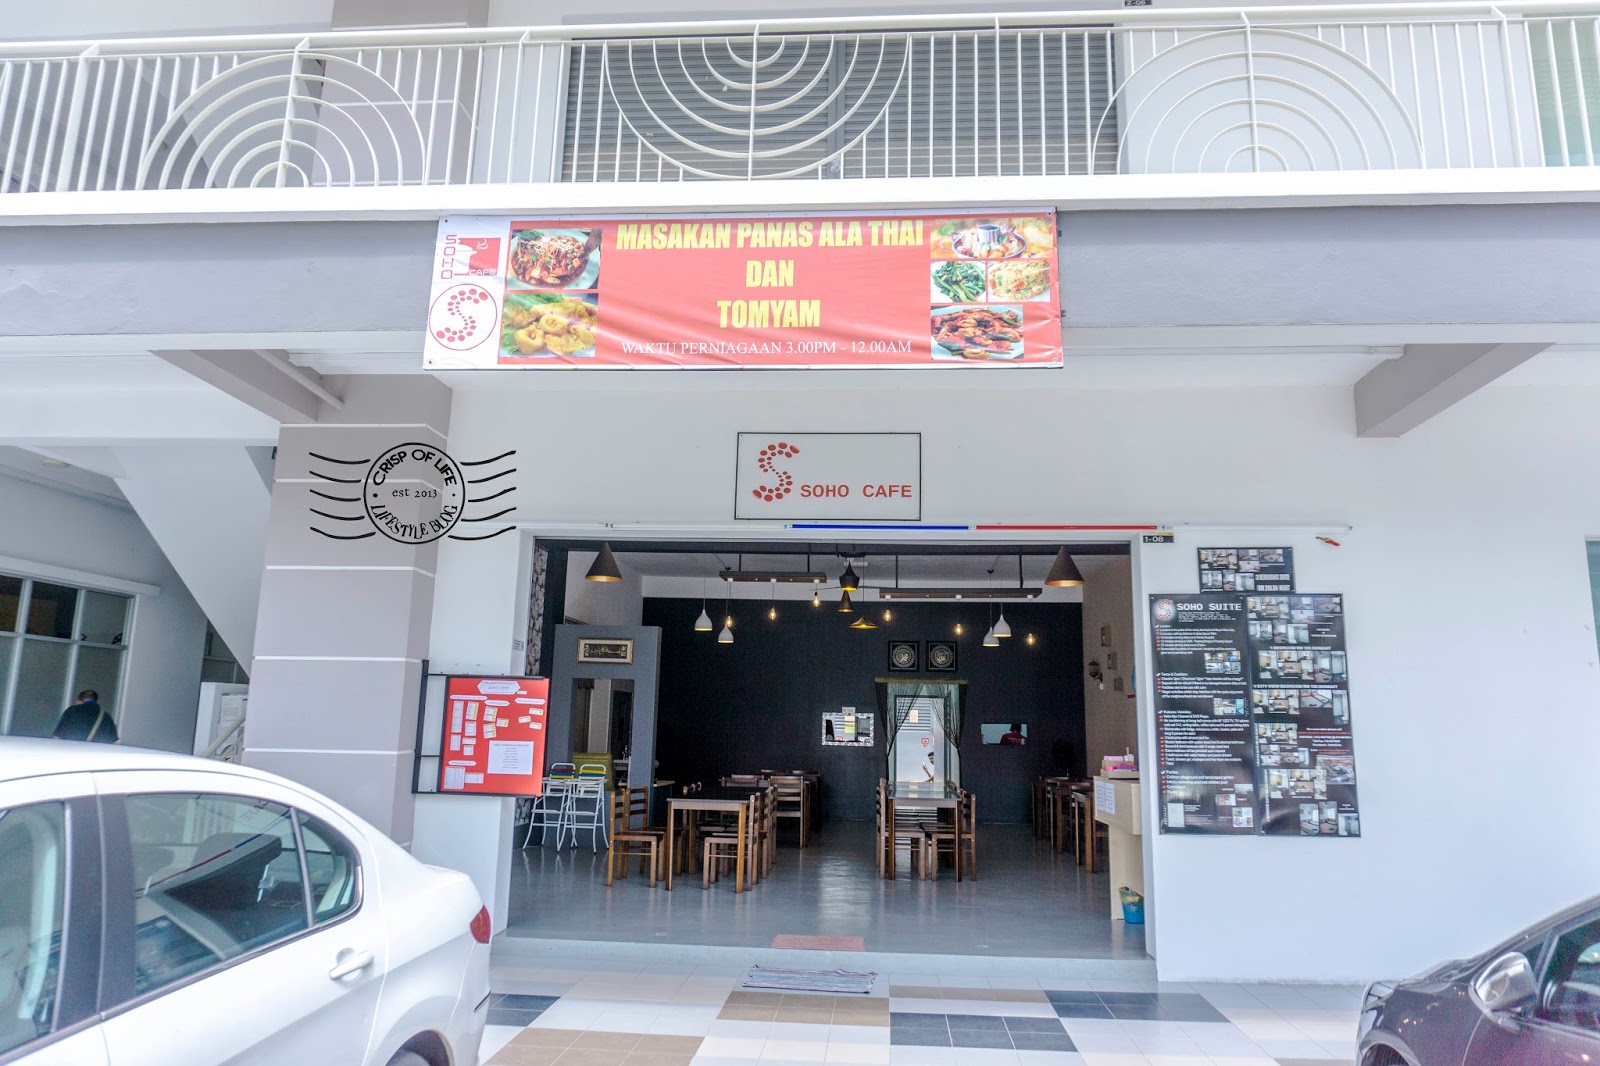 Thai Food and Tomyam in Penang